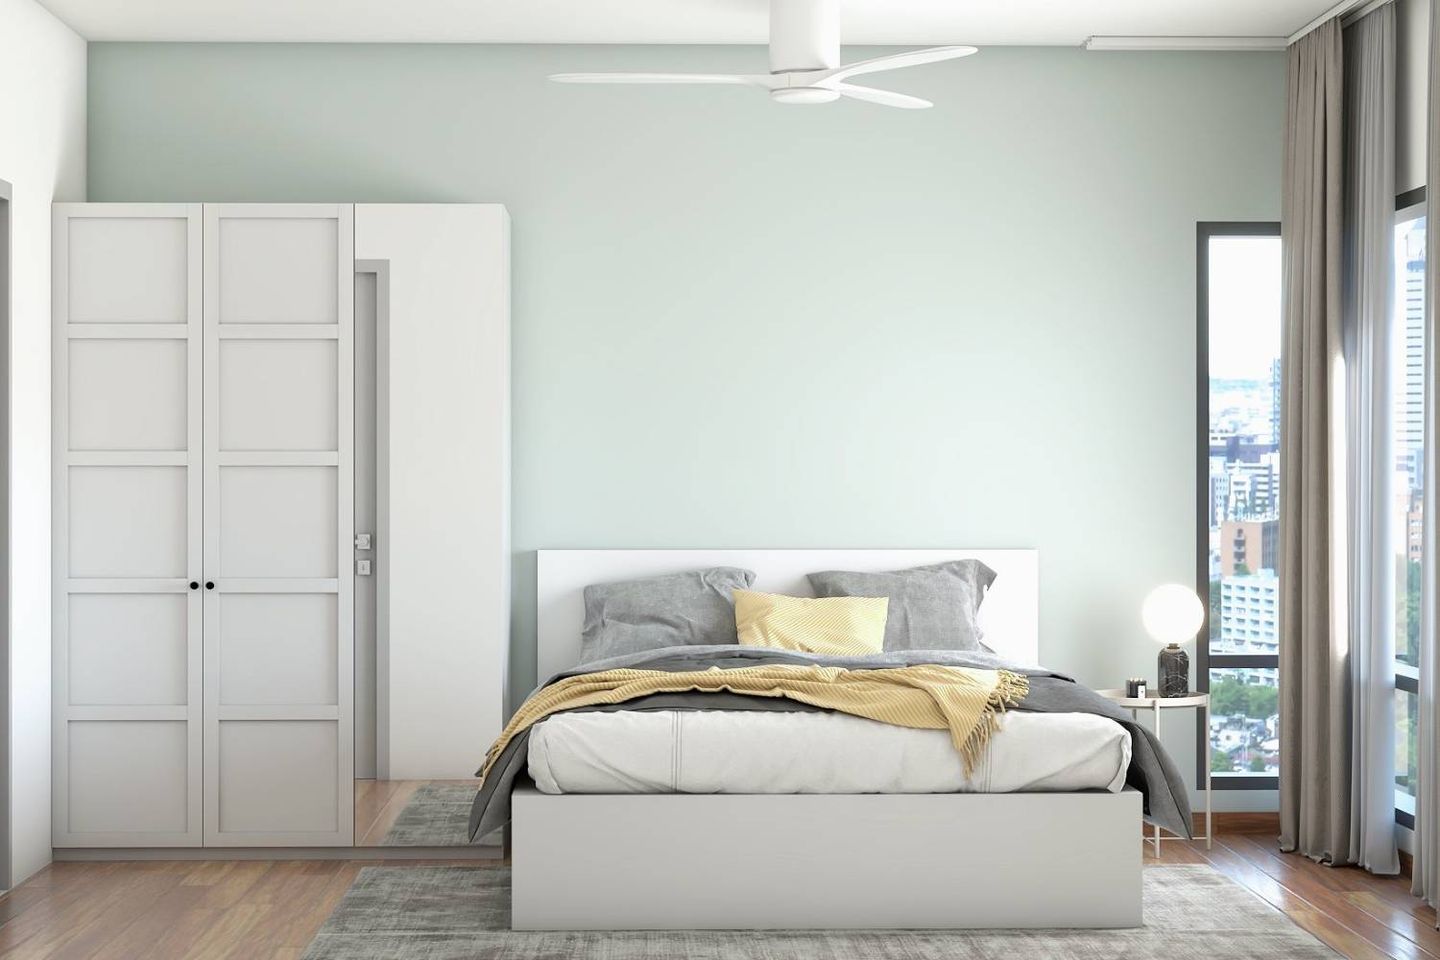 24 m² Master Bedroom Design With White Mirrored Swing Wardrobe - Livspace